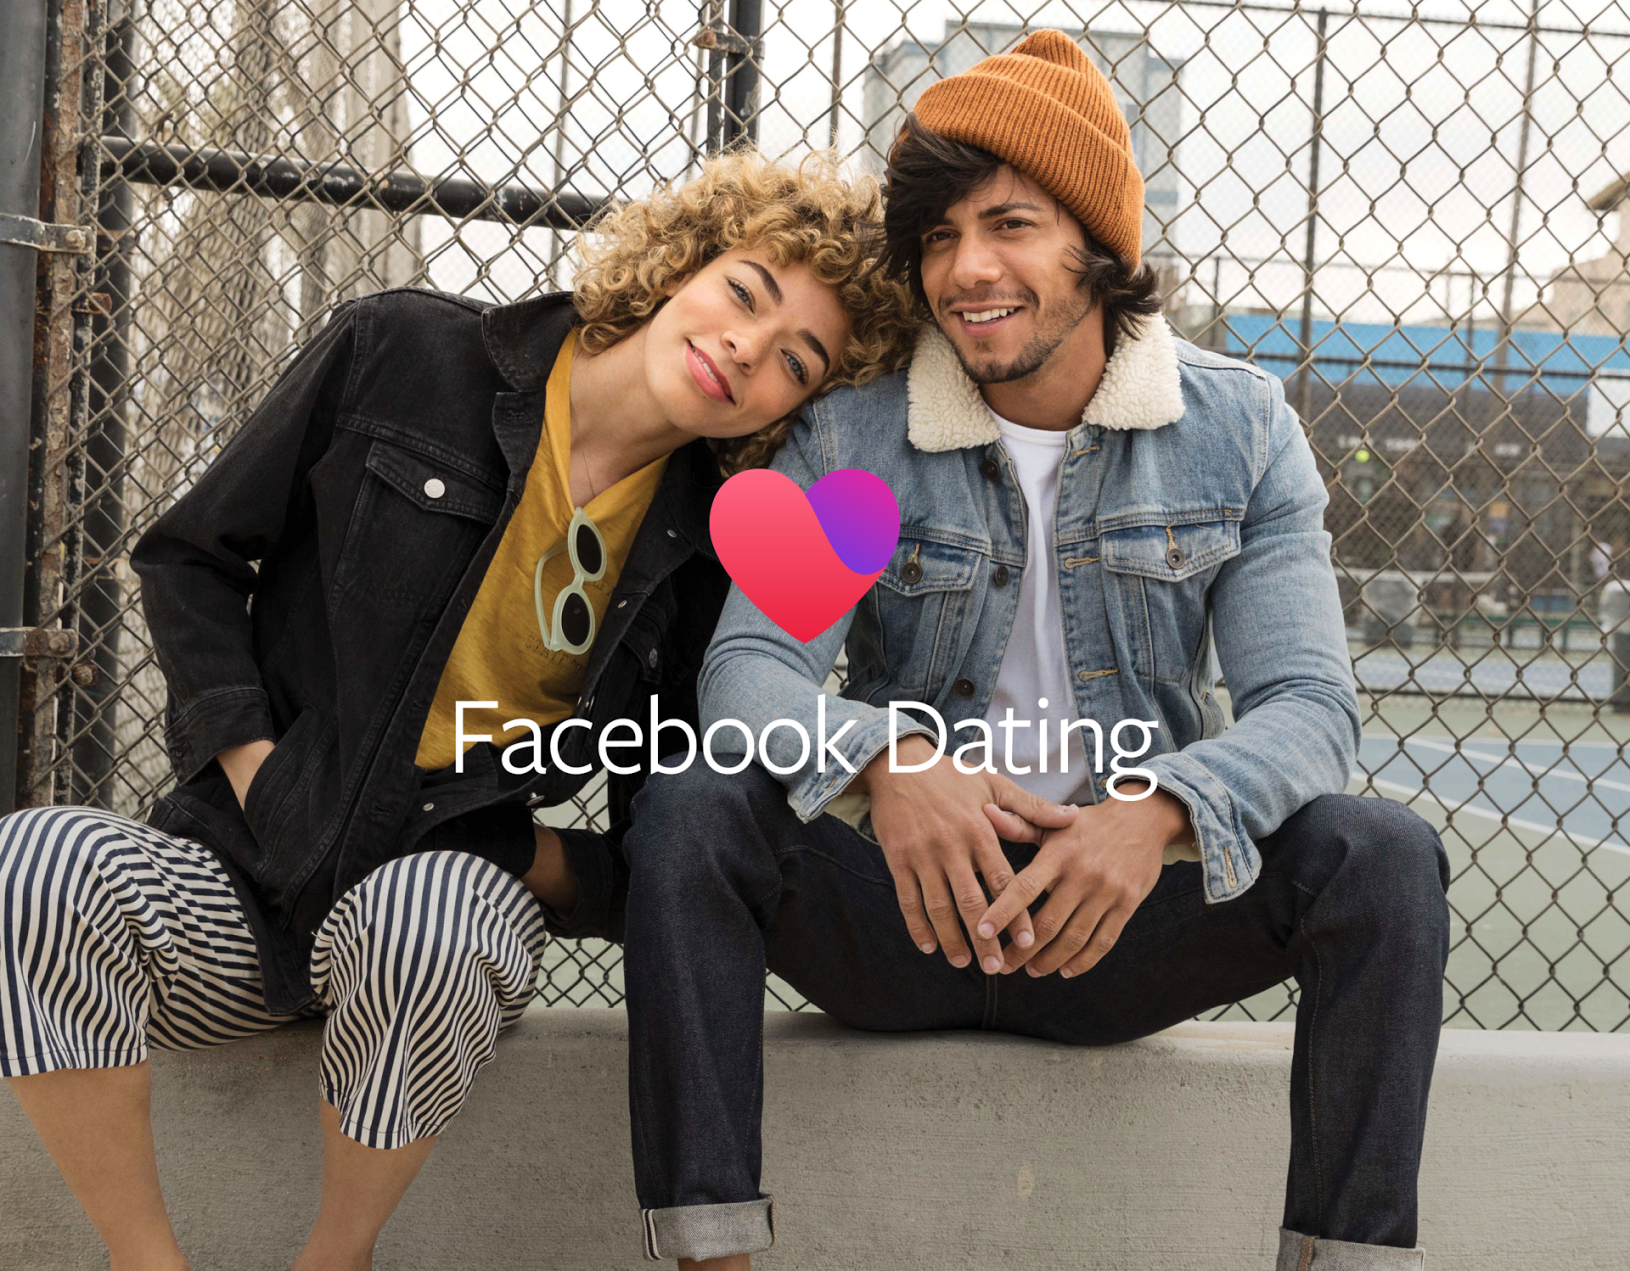 Facebook lanceert Facebook Dating